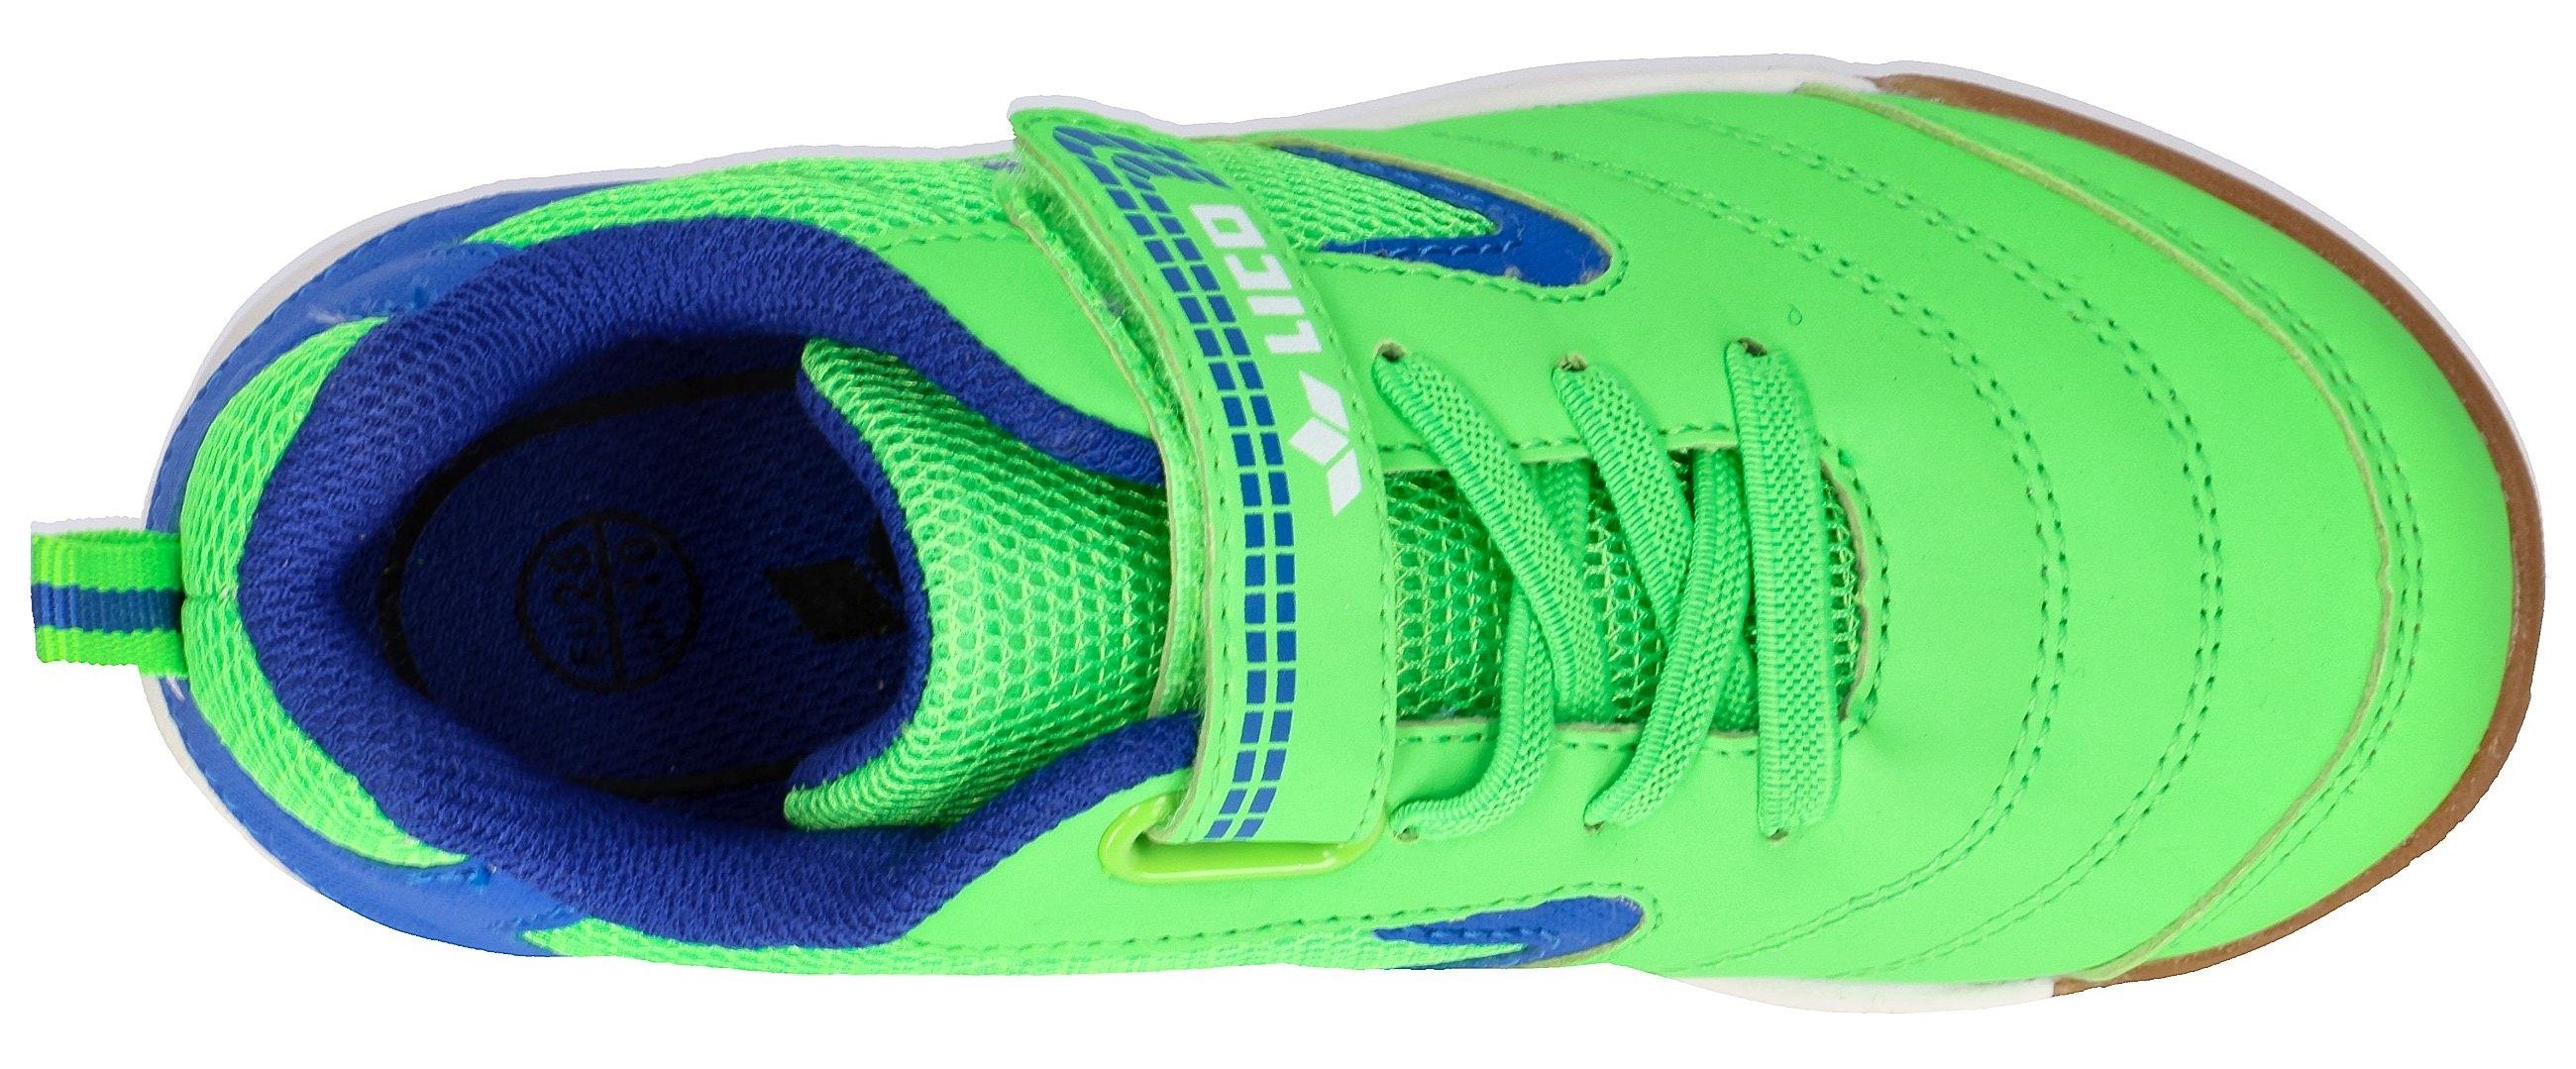 Lico Ari VS mit Laufsohle grün-blau Sneaker heller WMS